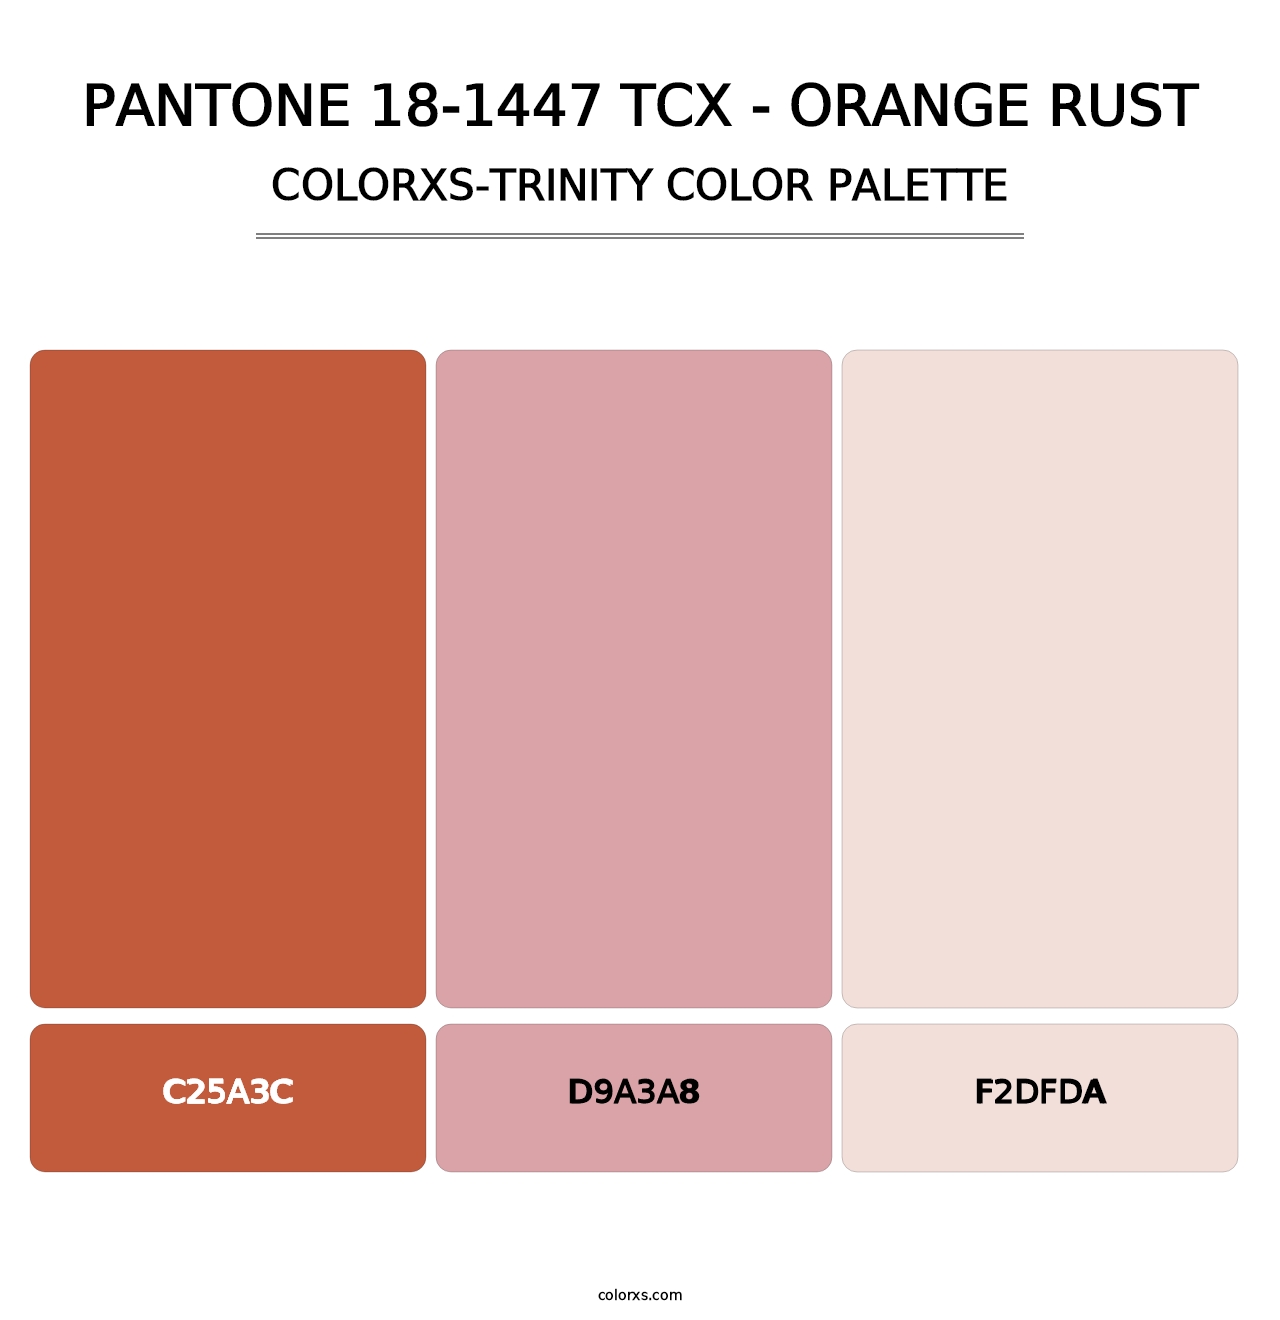 PANTONE 18-1447 TCX - Orange Rust - Colorxs Trinity Palette